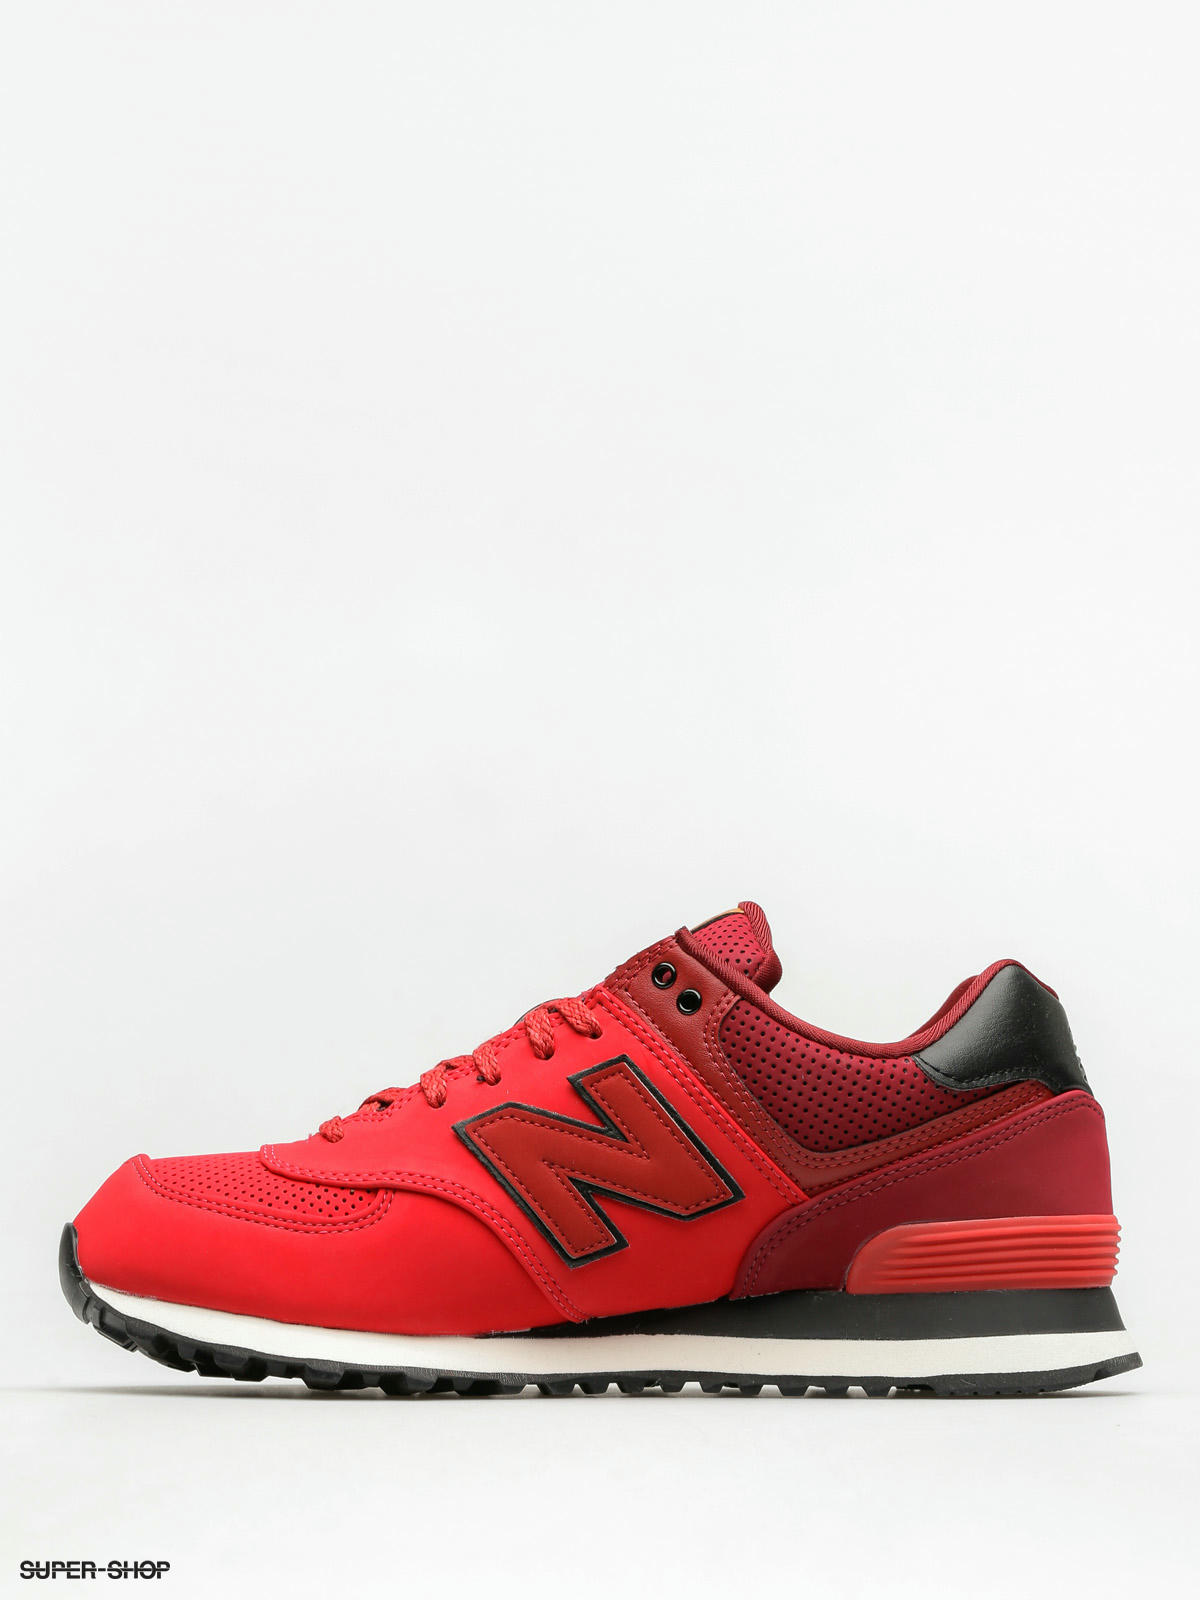 New Balance Shoes 574 (red) صوره تخطيط